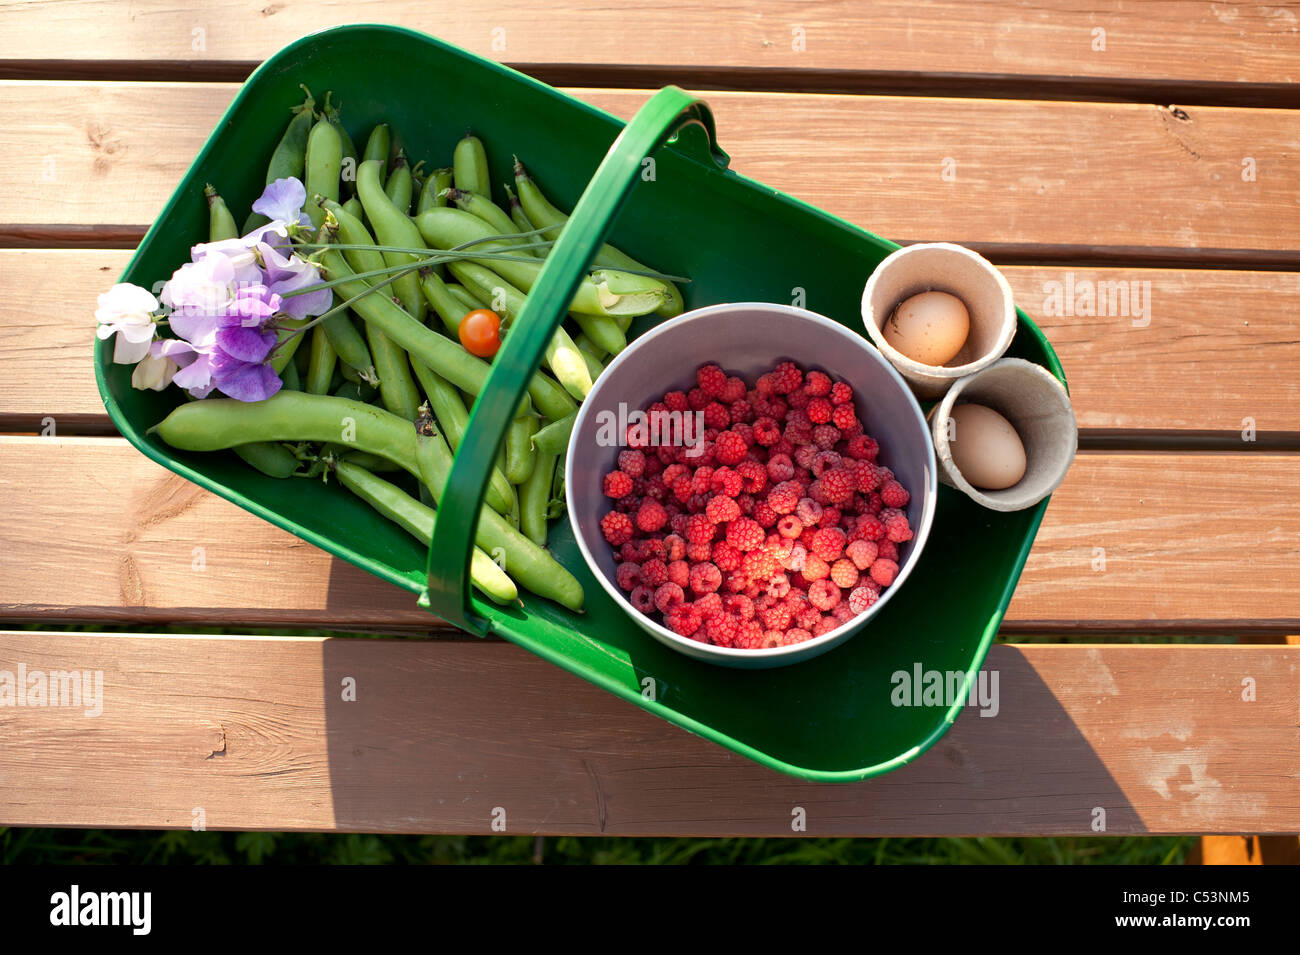 A plastic trug basket full of fresh garden produce grown on an allotment, UK - peas beans raspberries Stock Photo